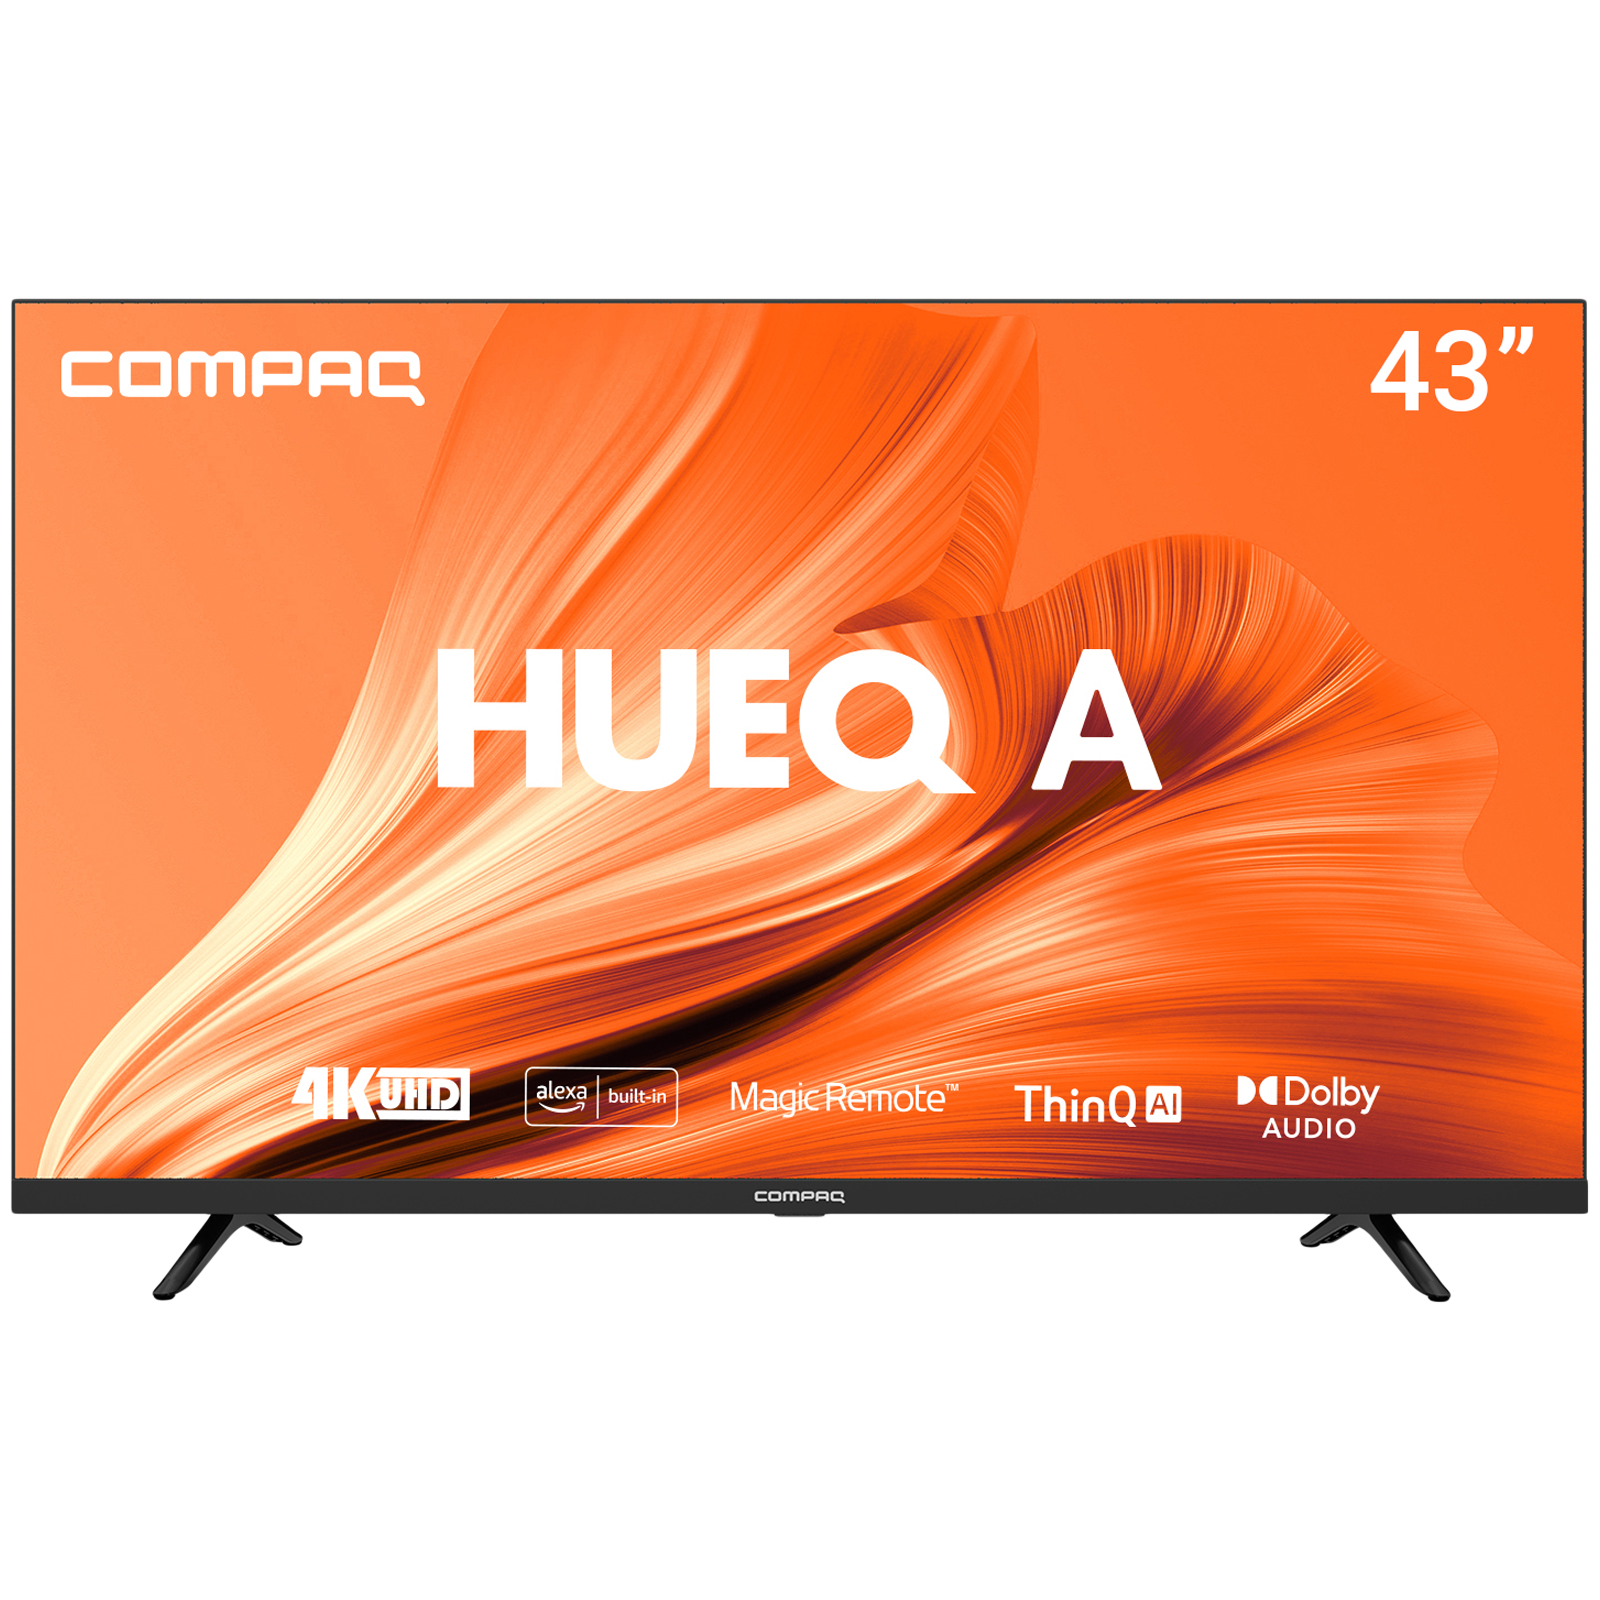 Compaq HUEQ A 109 cm (43 inch) 4K Ultra HD WebOS TV with Dolby Audio (2022 model)